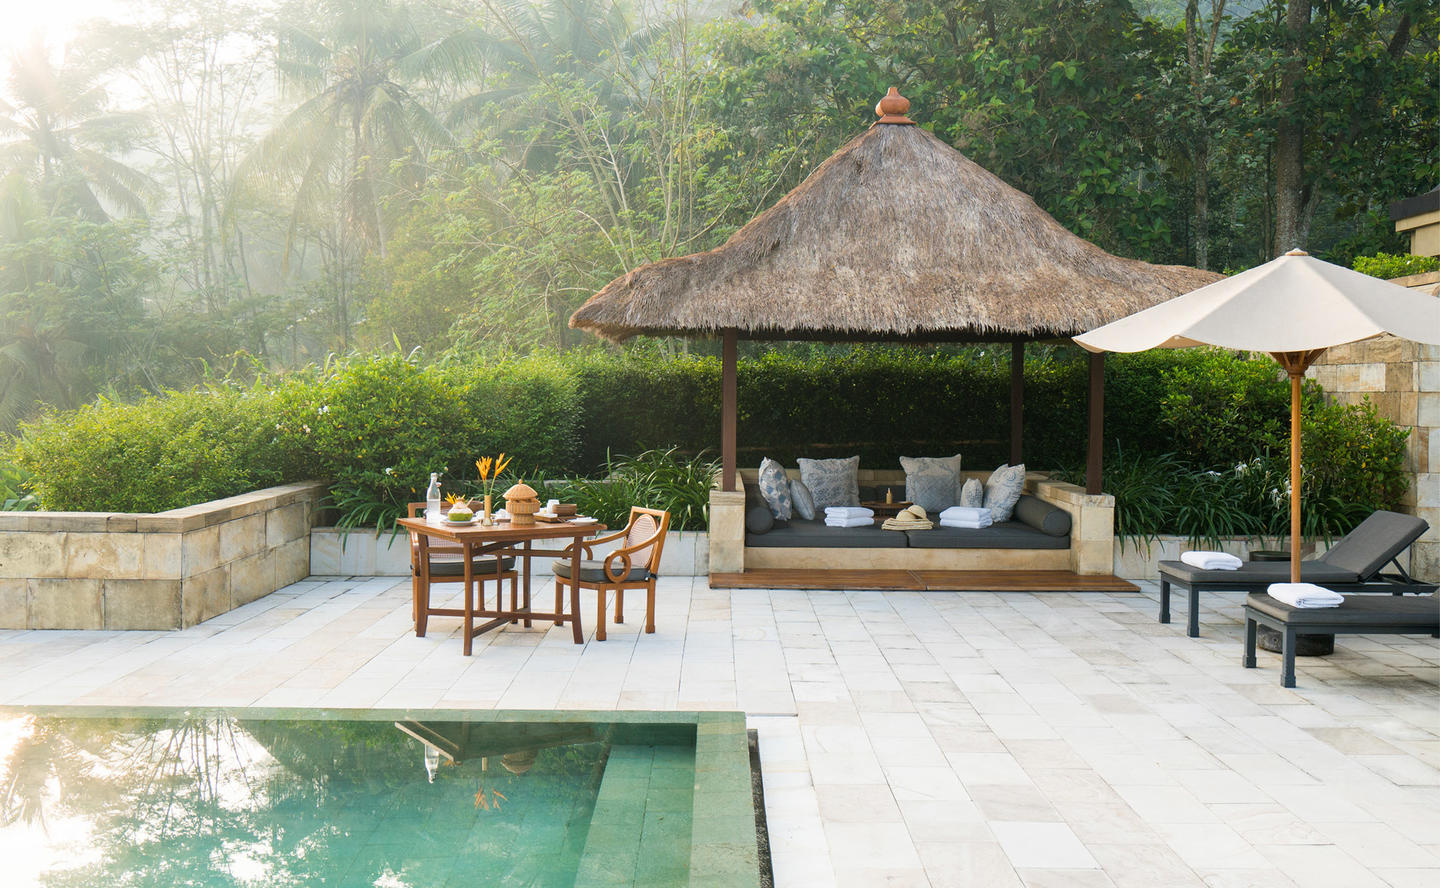 Poolside Relaxation Area, Dalem Jiwo Suite - Amanjiwo, Java, Indonesia